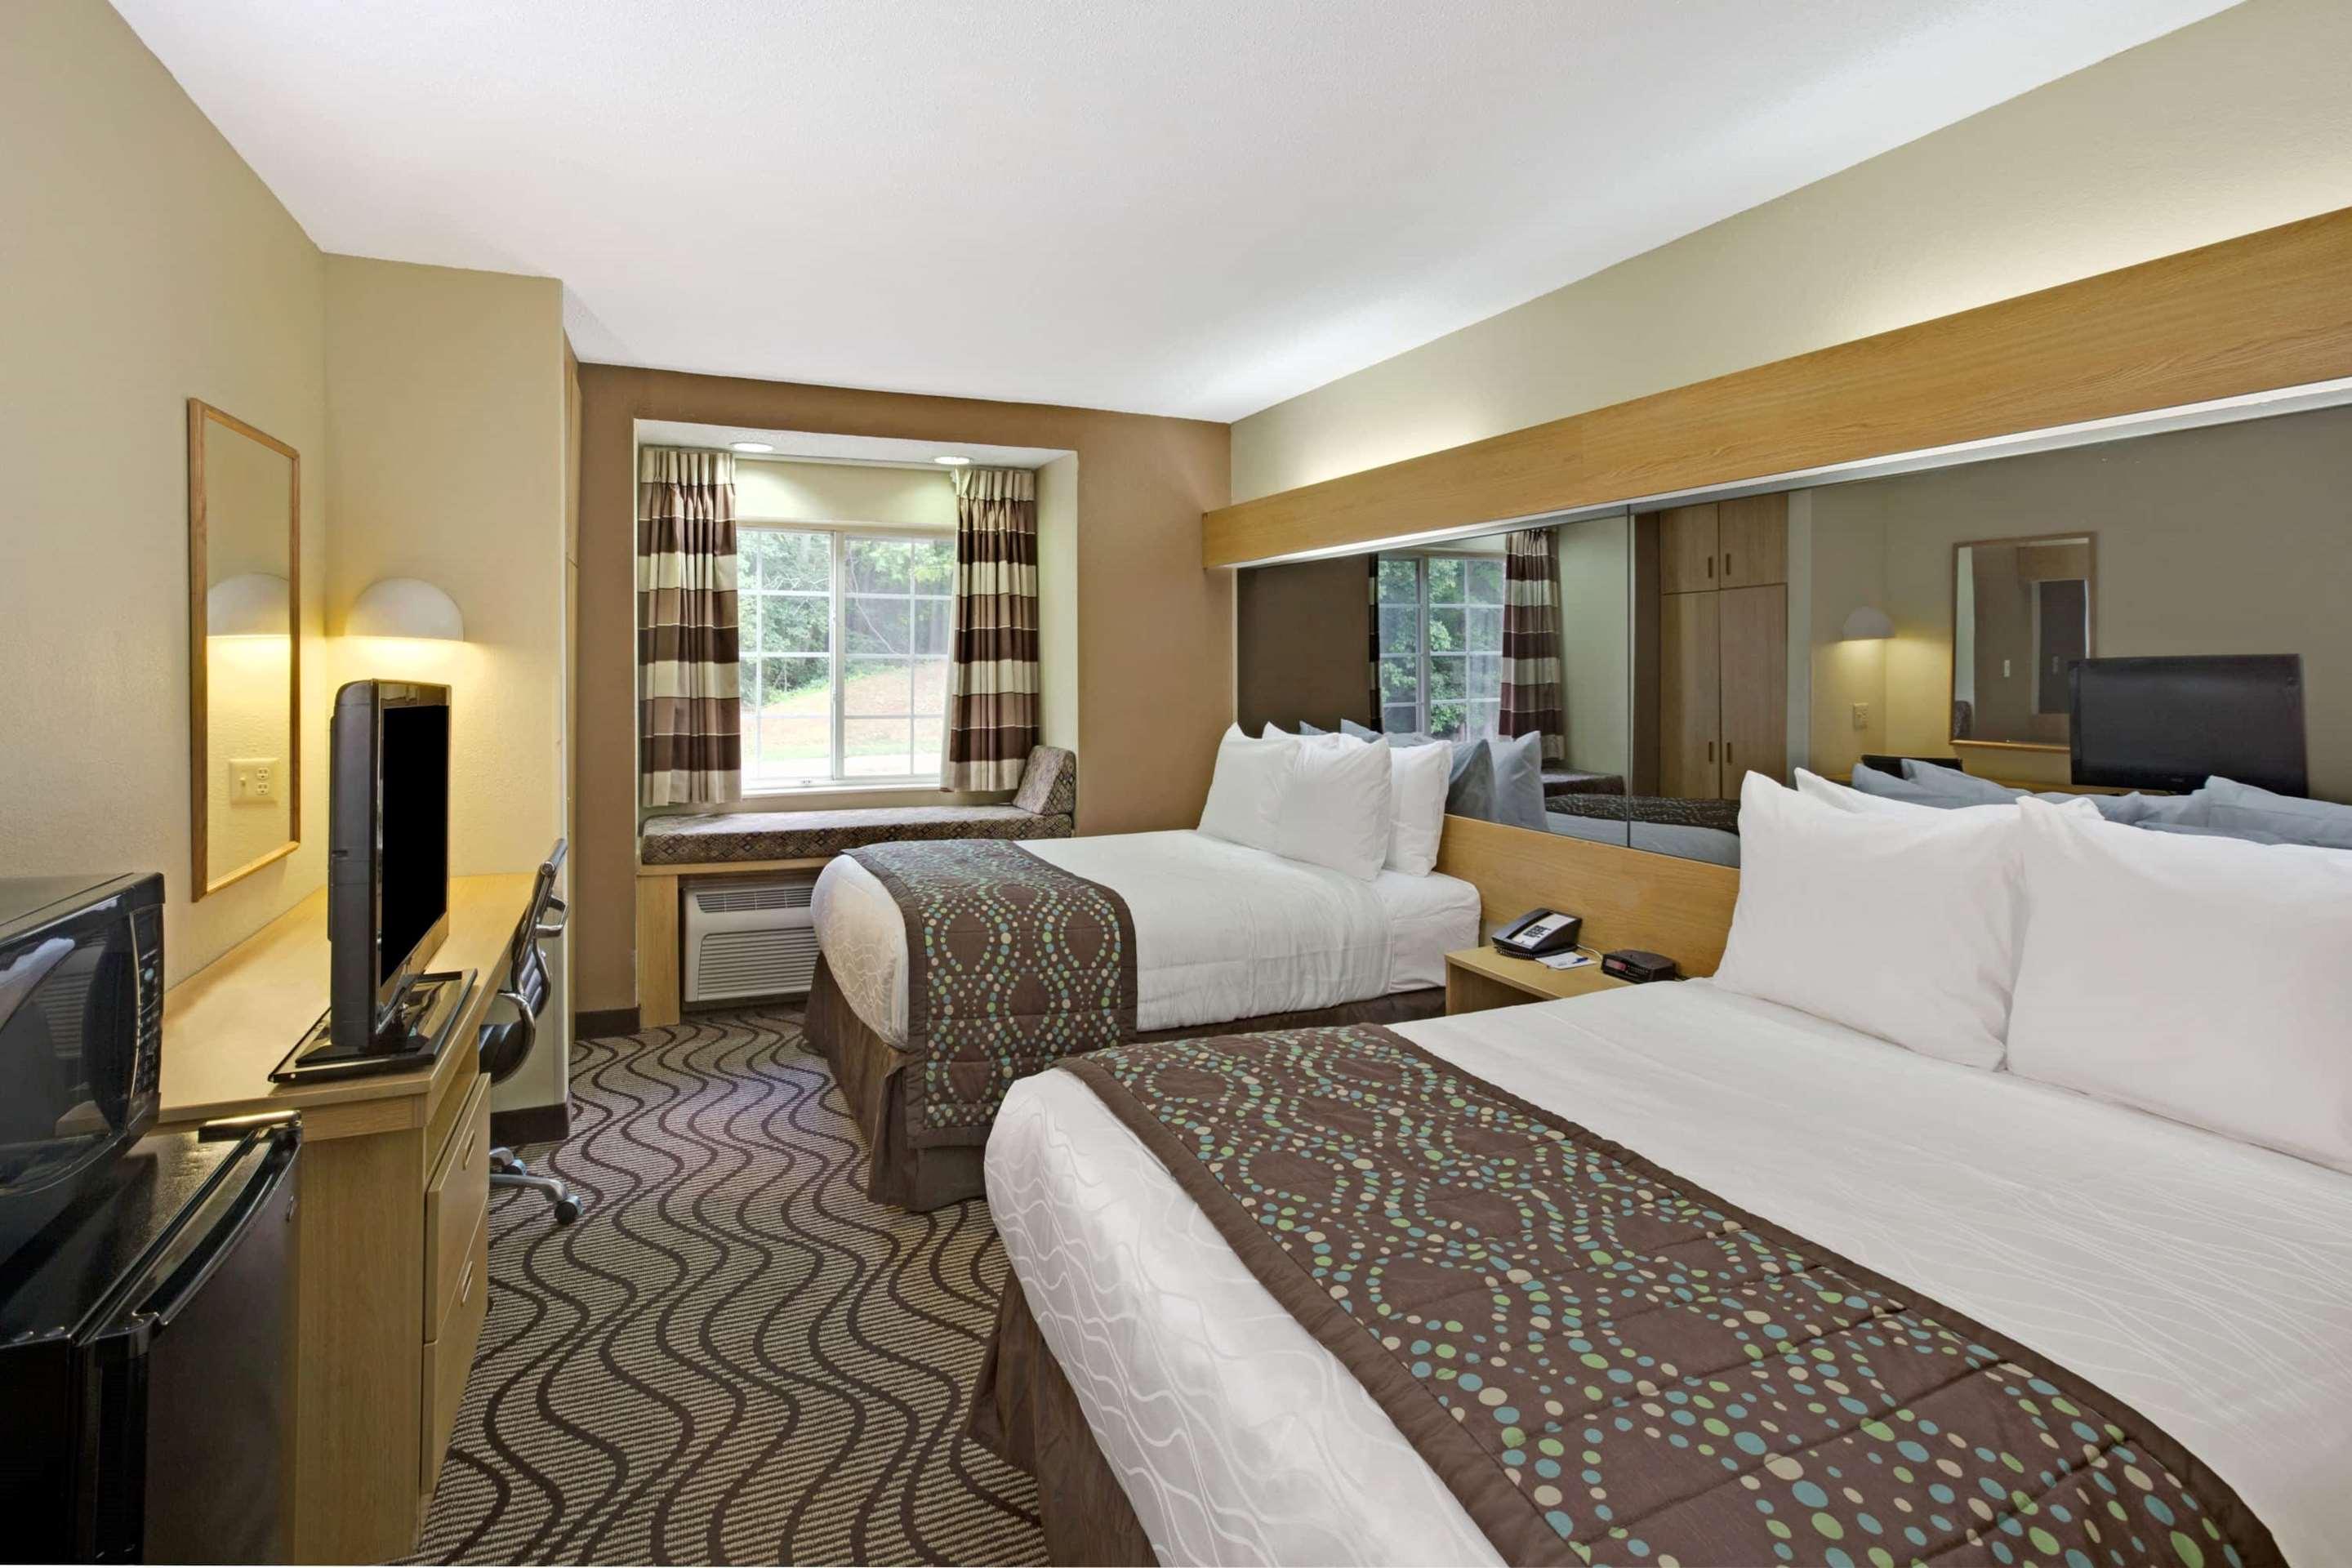 Hotel Microtel Inn & Suites by Wyndham Vernal/Naples, Vernal - Reserving.com